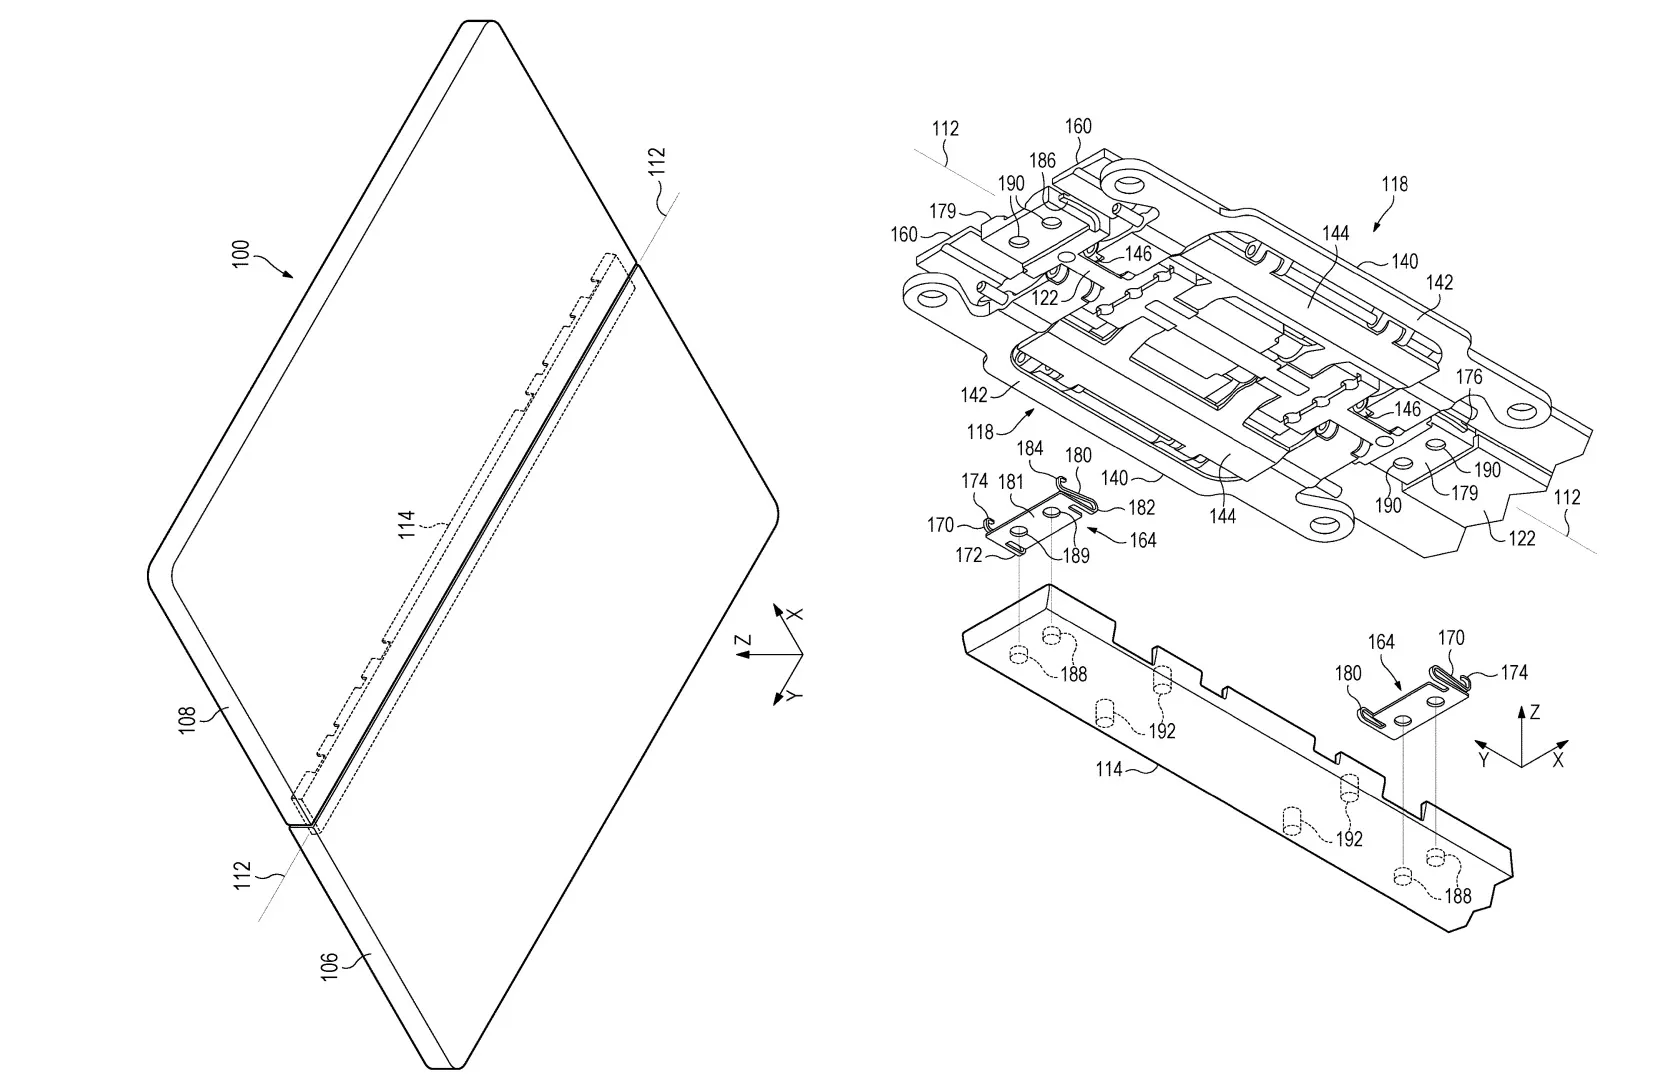 Patente de Surface Phone con cubierta de placa única